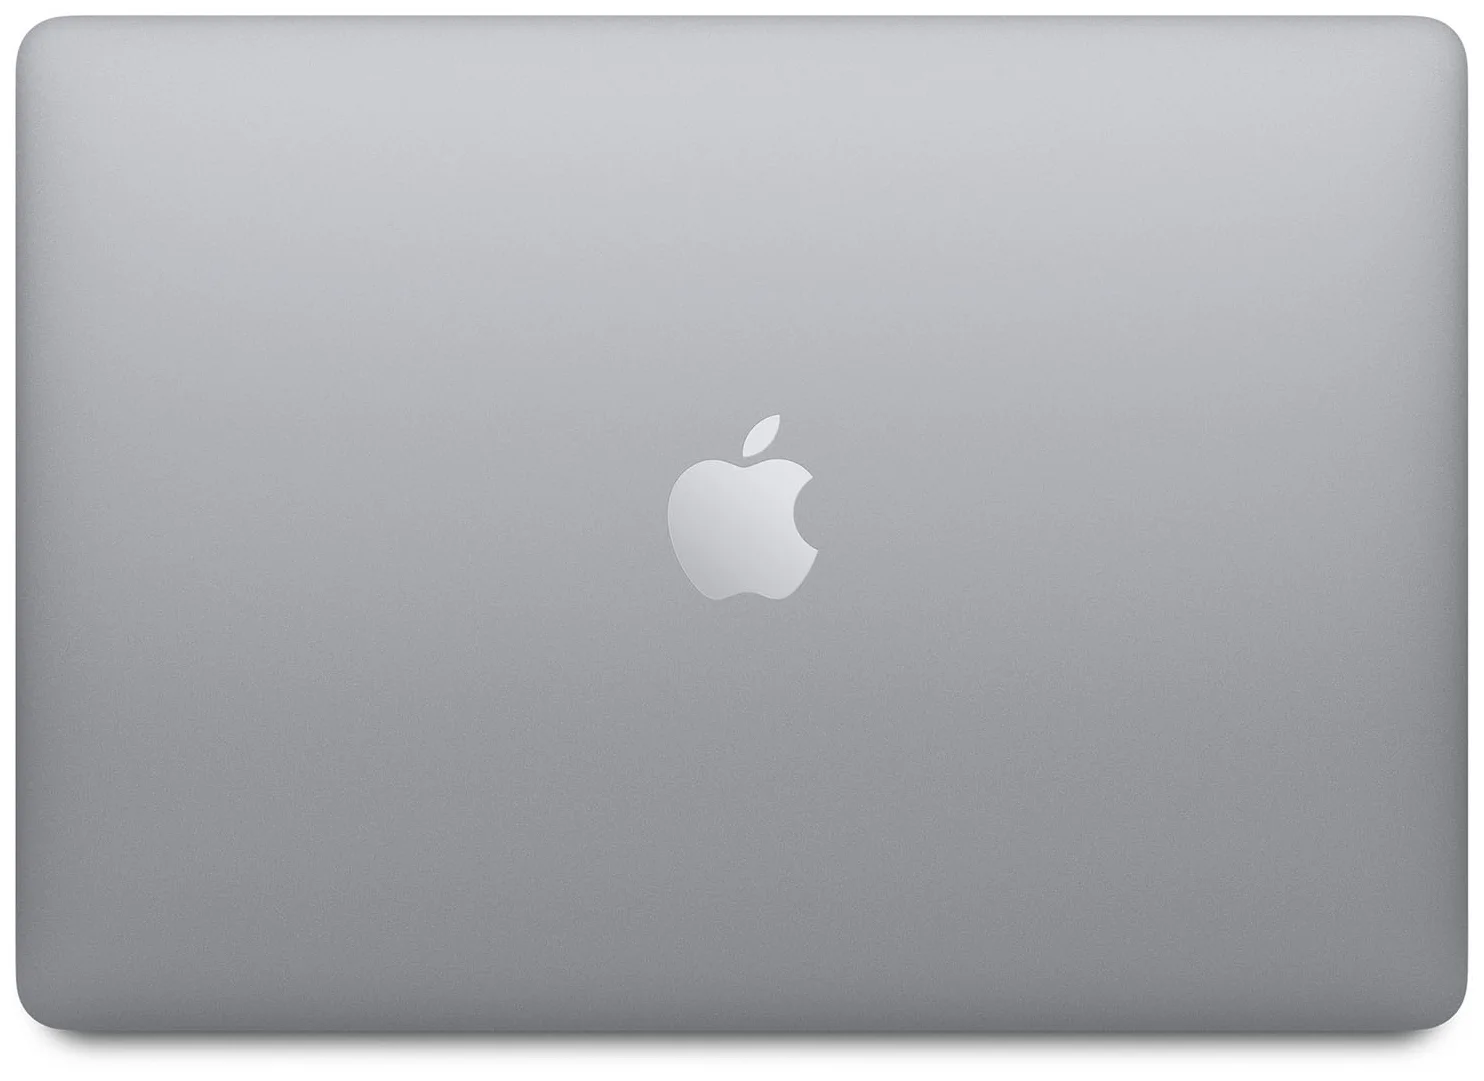 13.3" Apple MacBook Air 13 Late 2020 - емкость аккумулятора: 49.9 Вт⋅ч